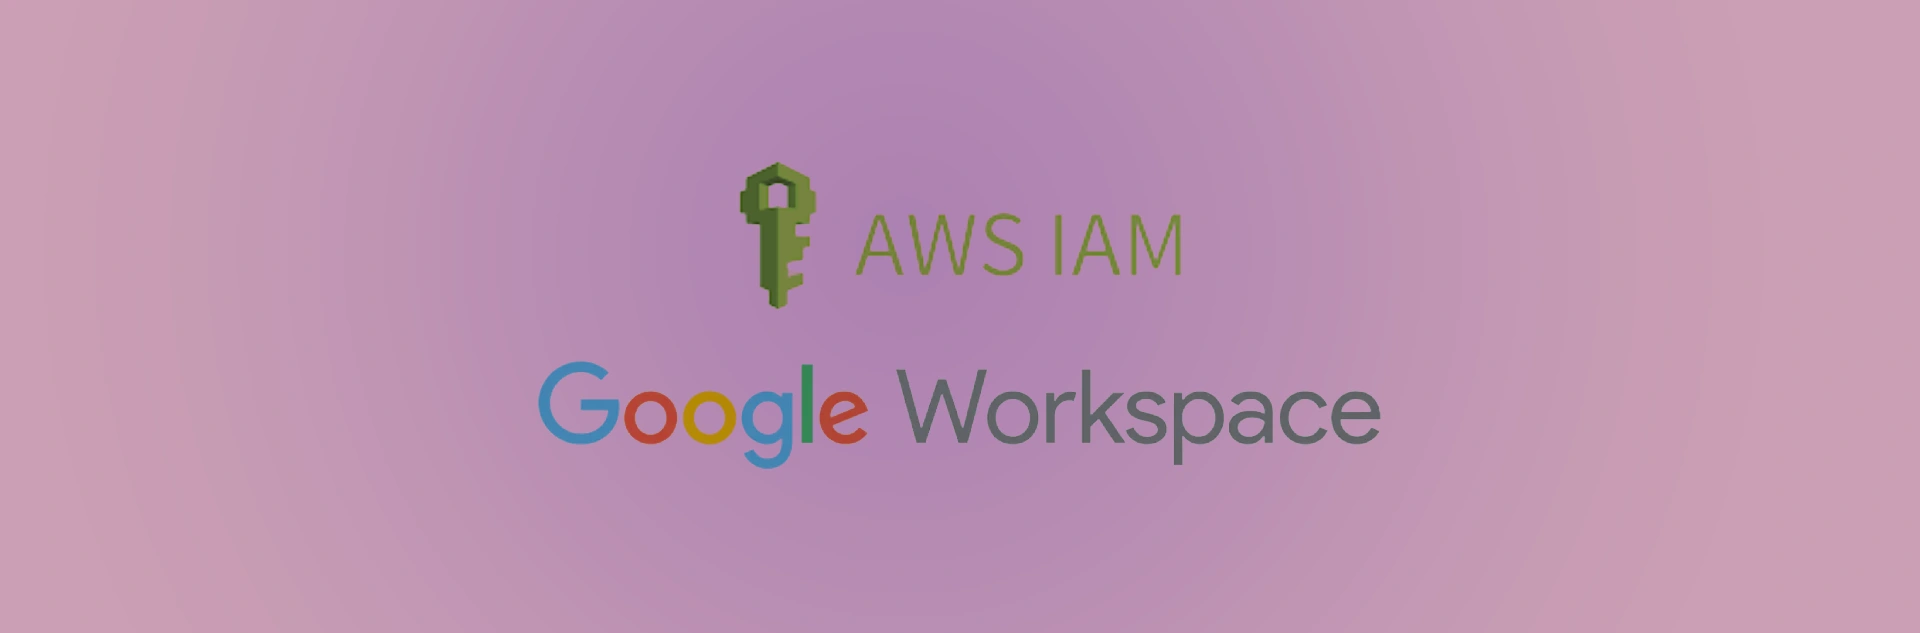 How to set up AWS IAM federation using Google Workspace